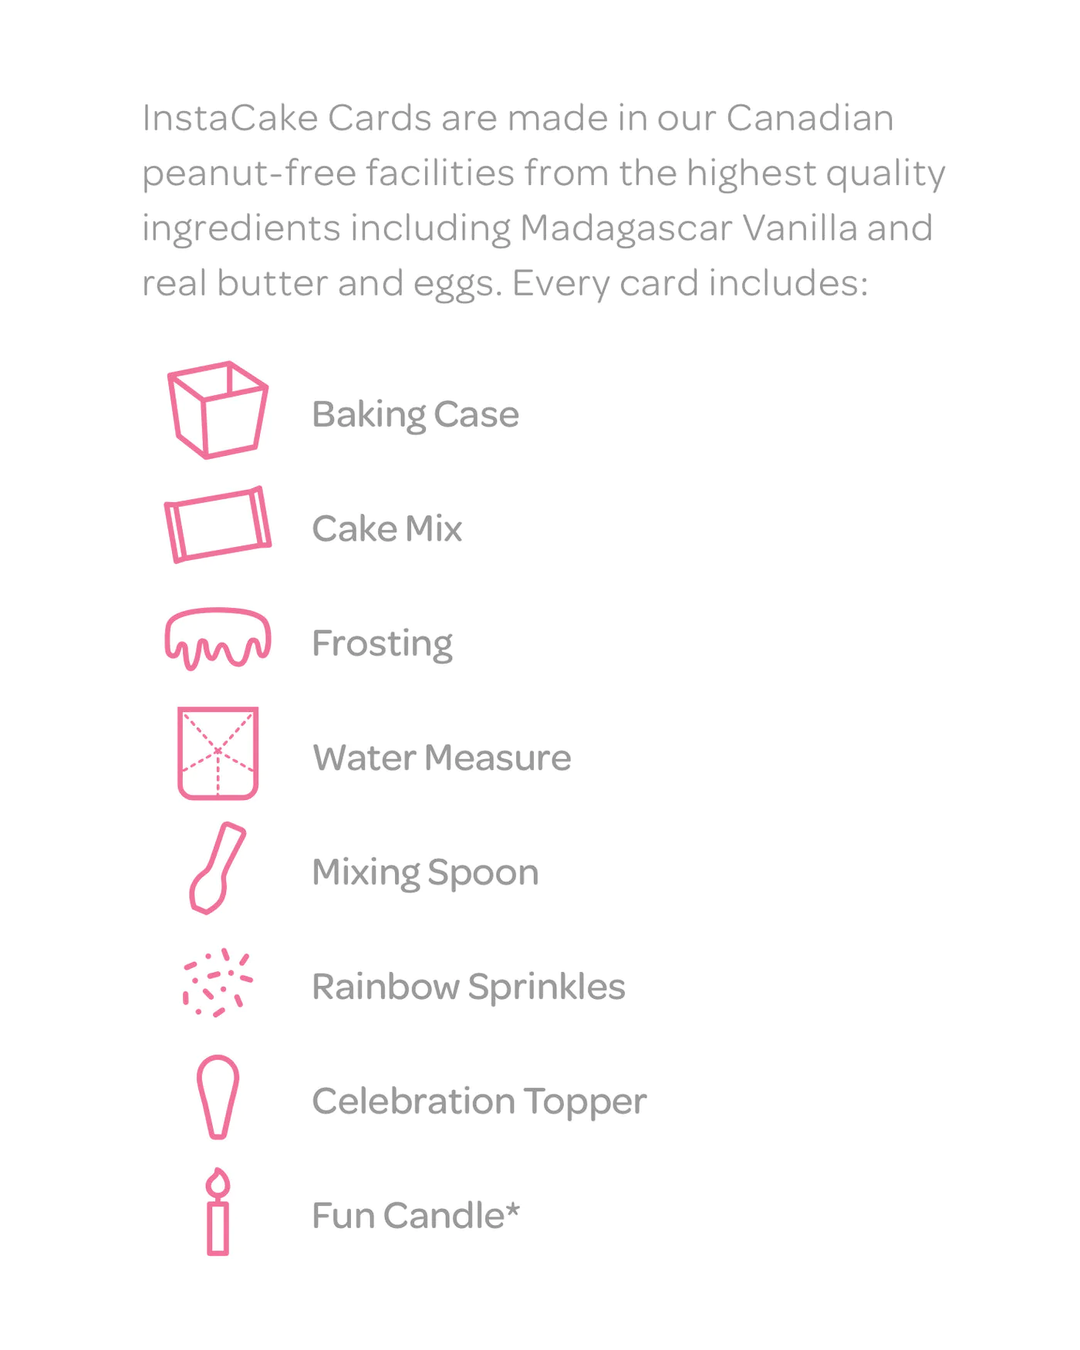 InstaCakes<br> Celebration Cake Kit<br> Confetti Vanilla